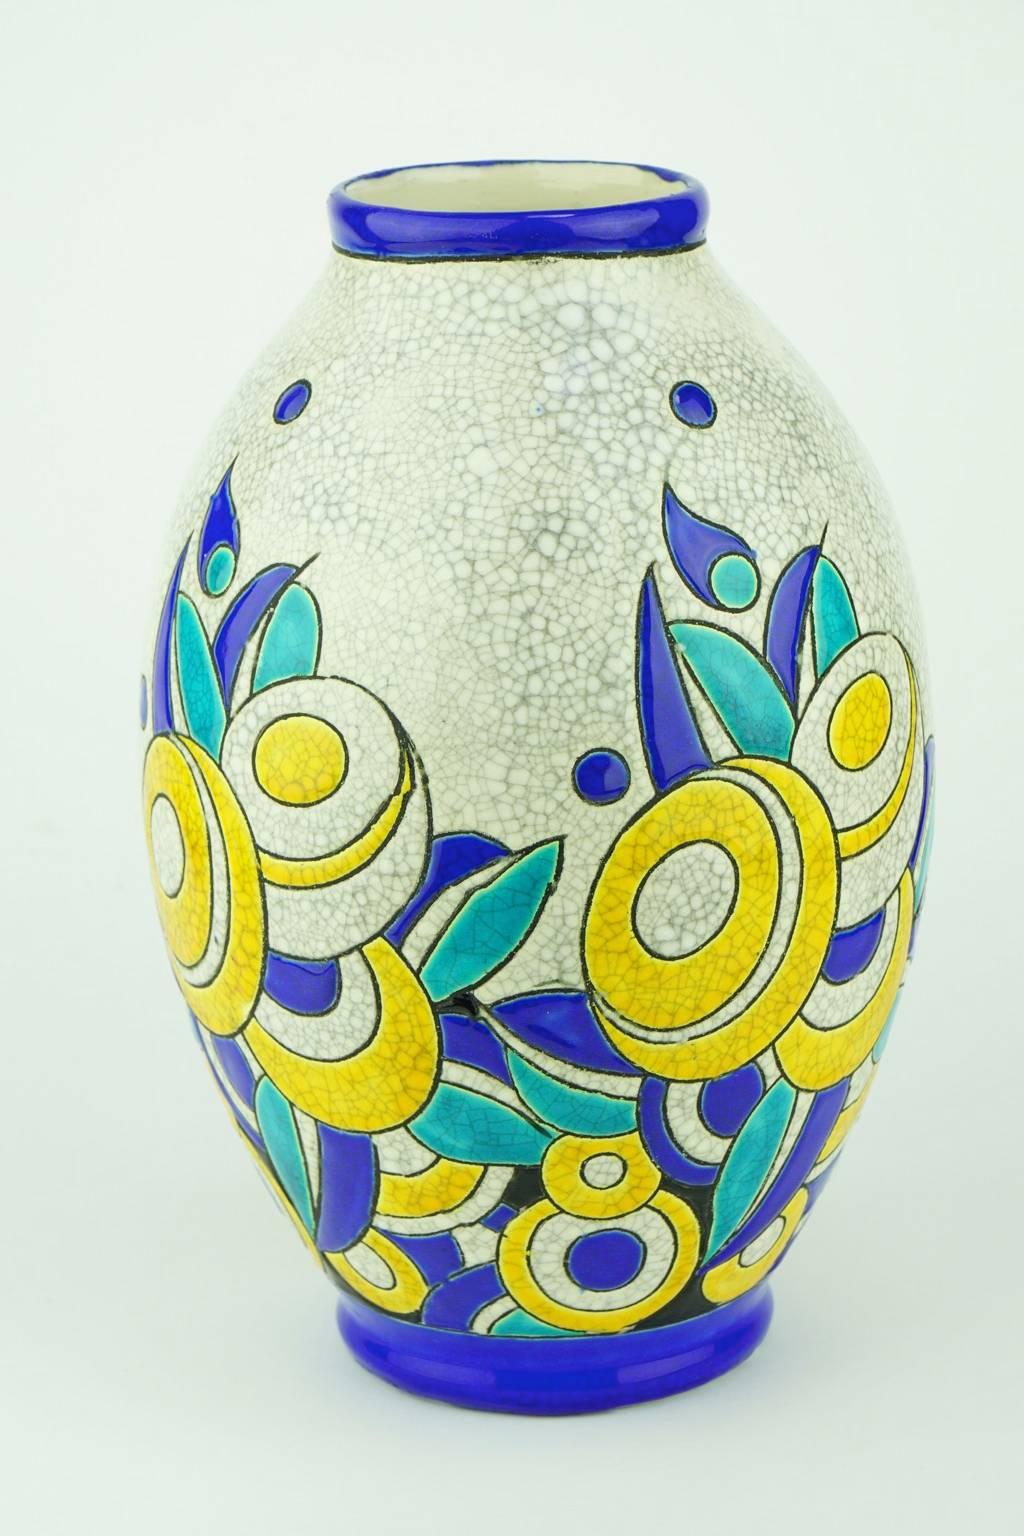 Art Deco Keramis Boch crackled enameled earthenware vase with geometric flower pattern. Marks D1175 and F899. Size: H. 26.8 cm. Top diameter 8.1 cm bottom diameter 9.5 cm.